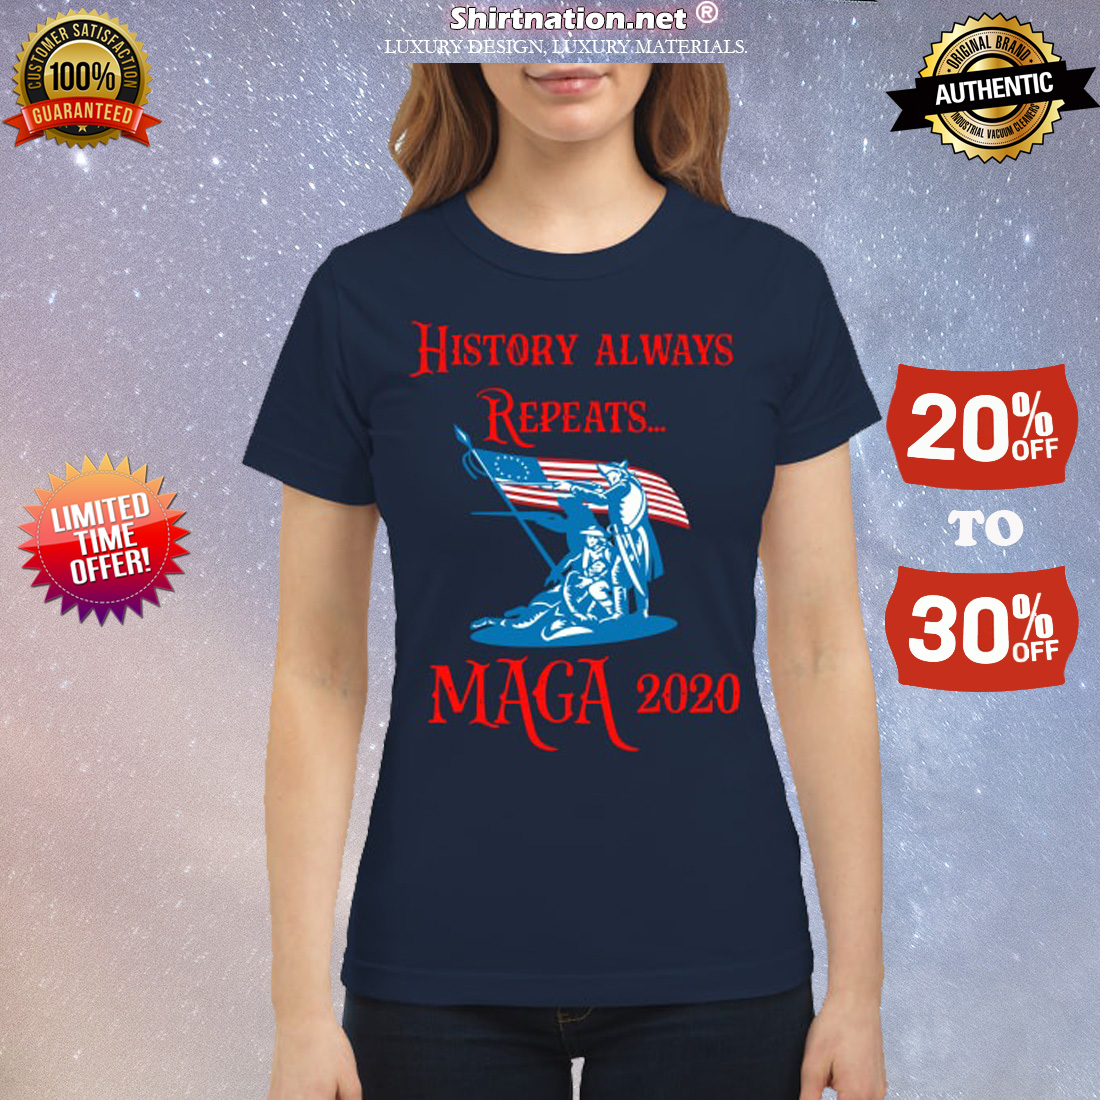 History always repeats Maga 2020 classic shirt